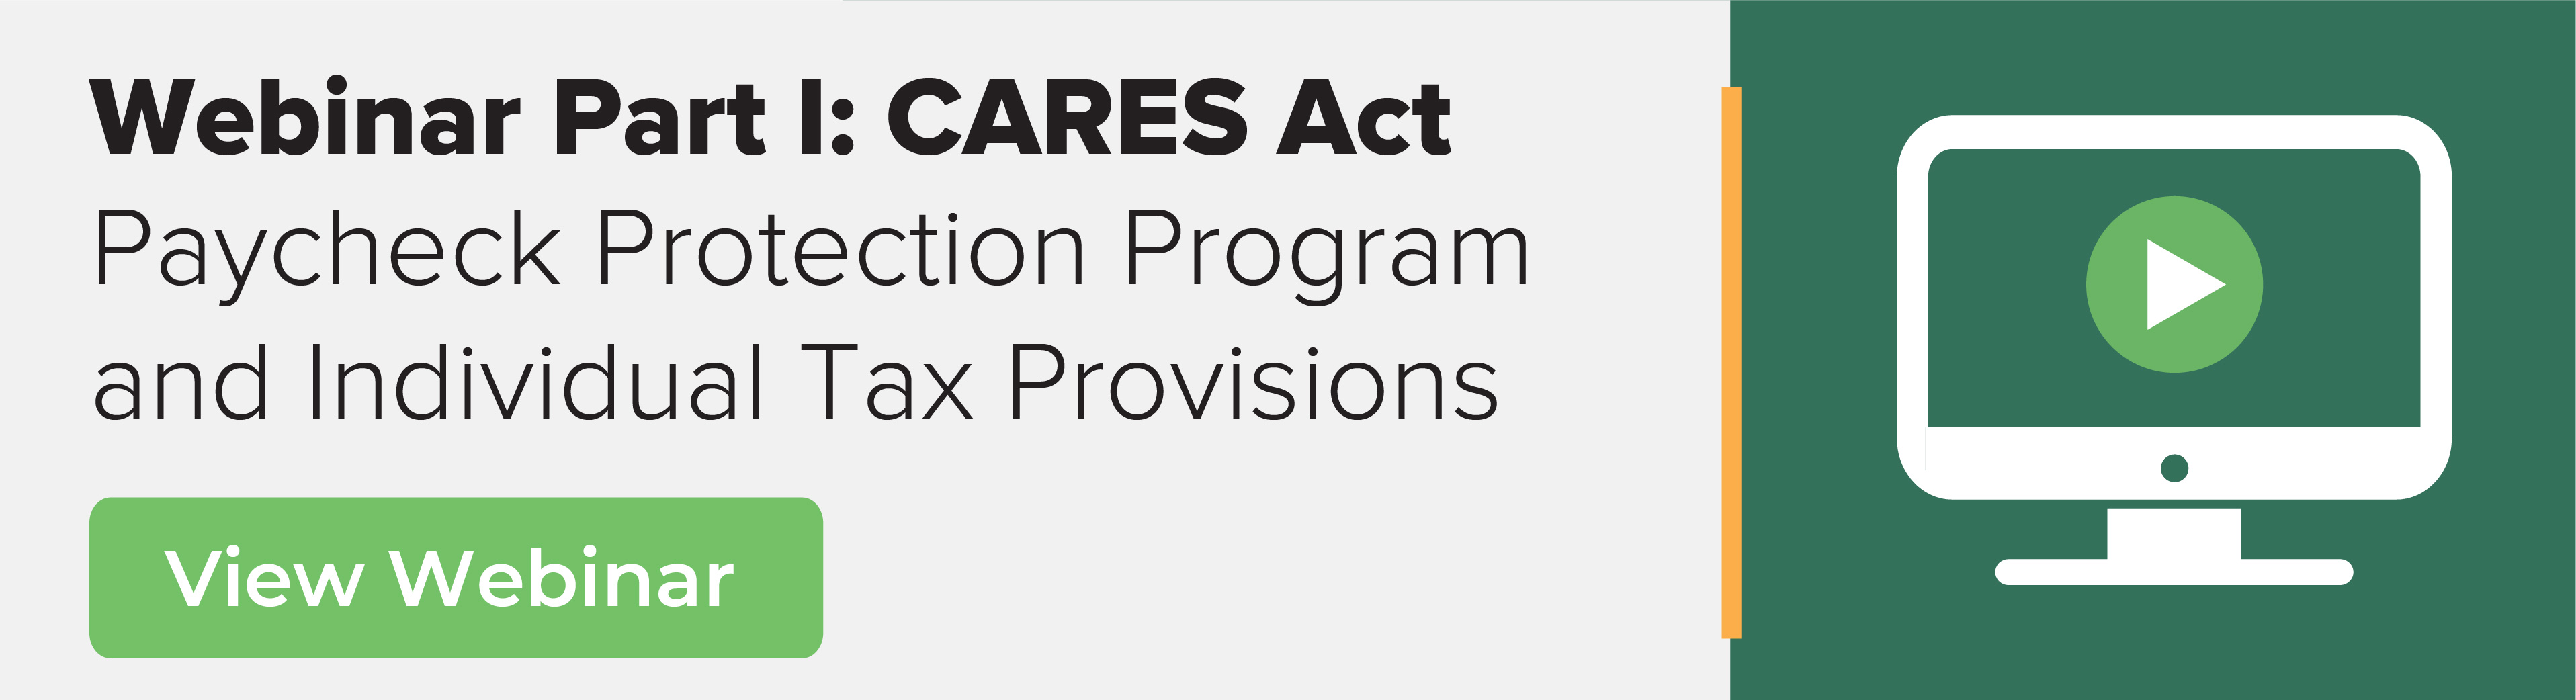 Webinar Part I: CARES Act - Paycheck Protection Program and Individual Tax Provisions